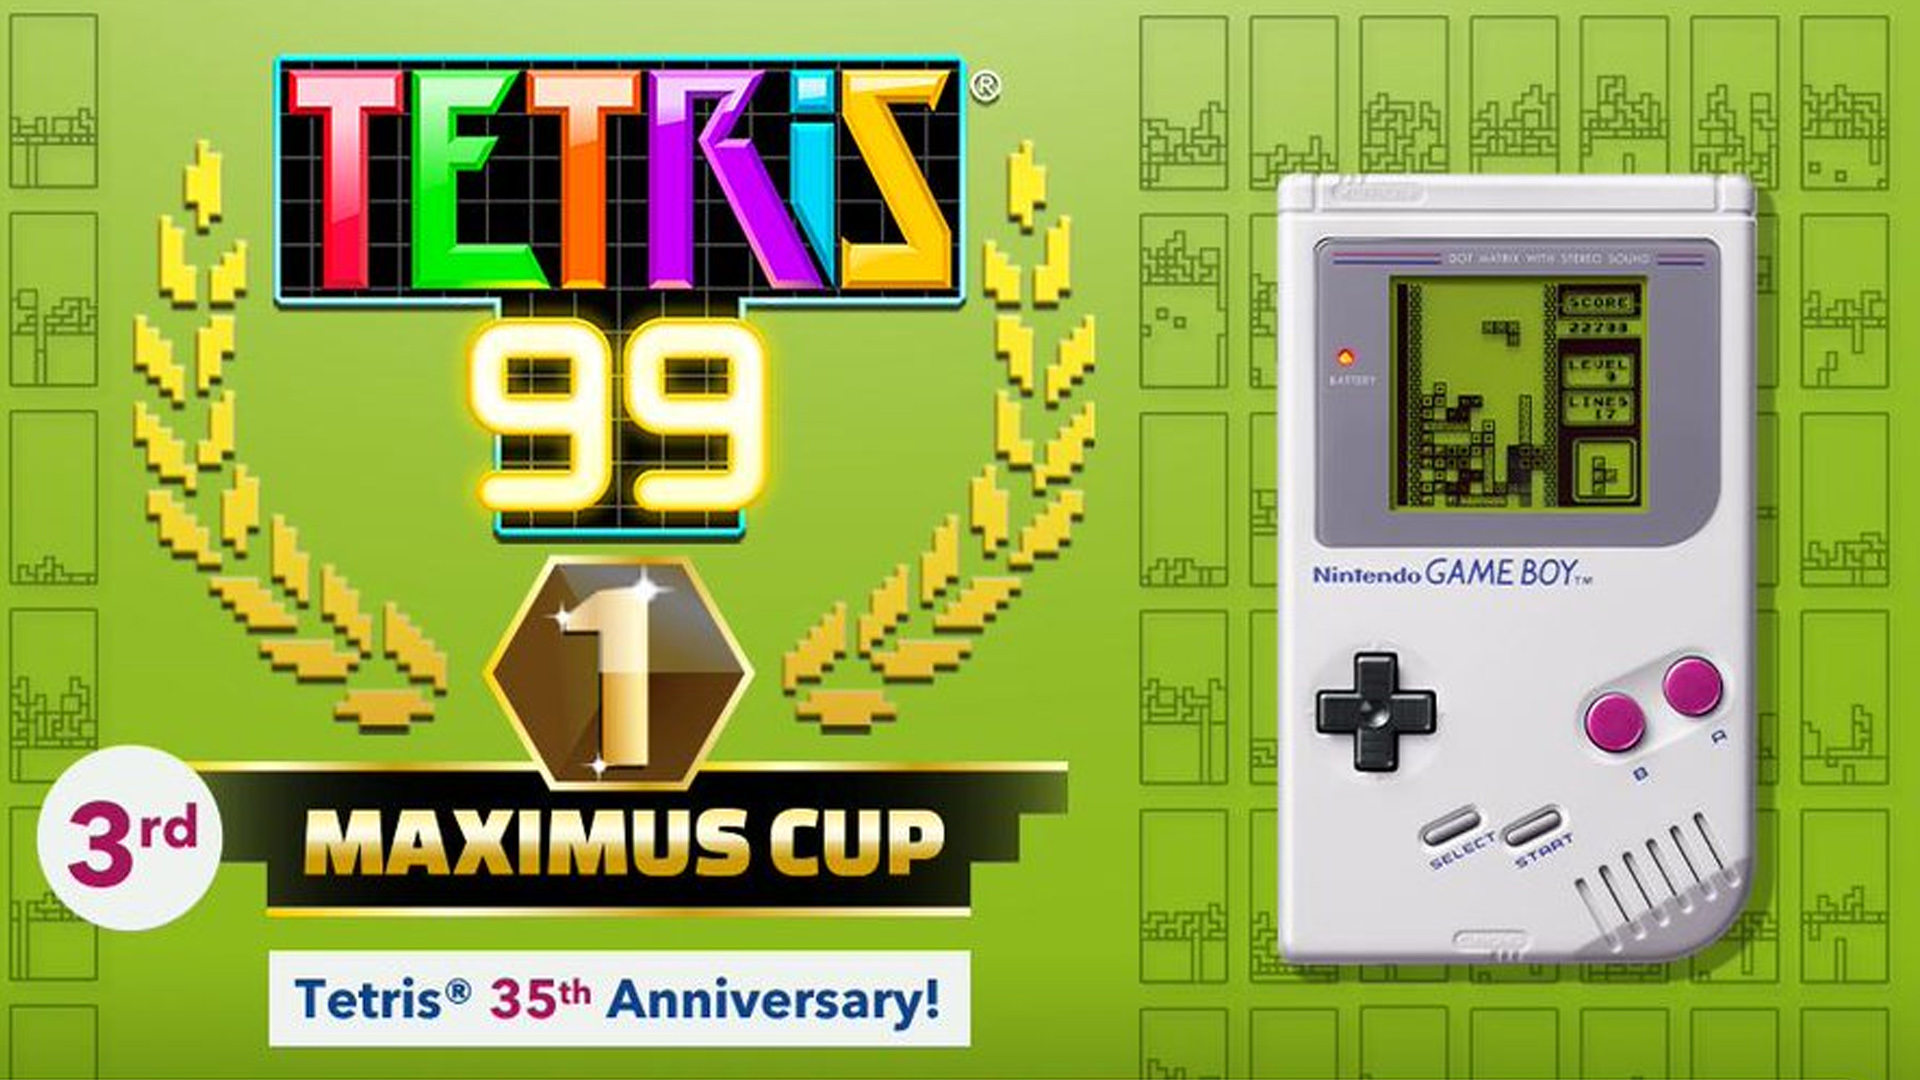 Tetris 99 online free